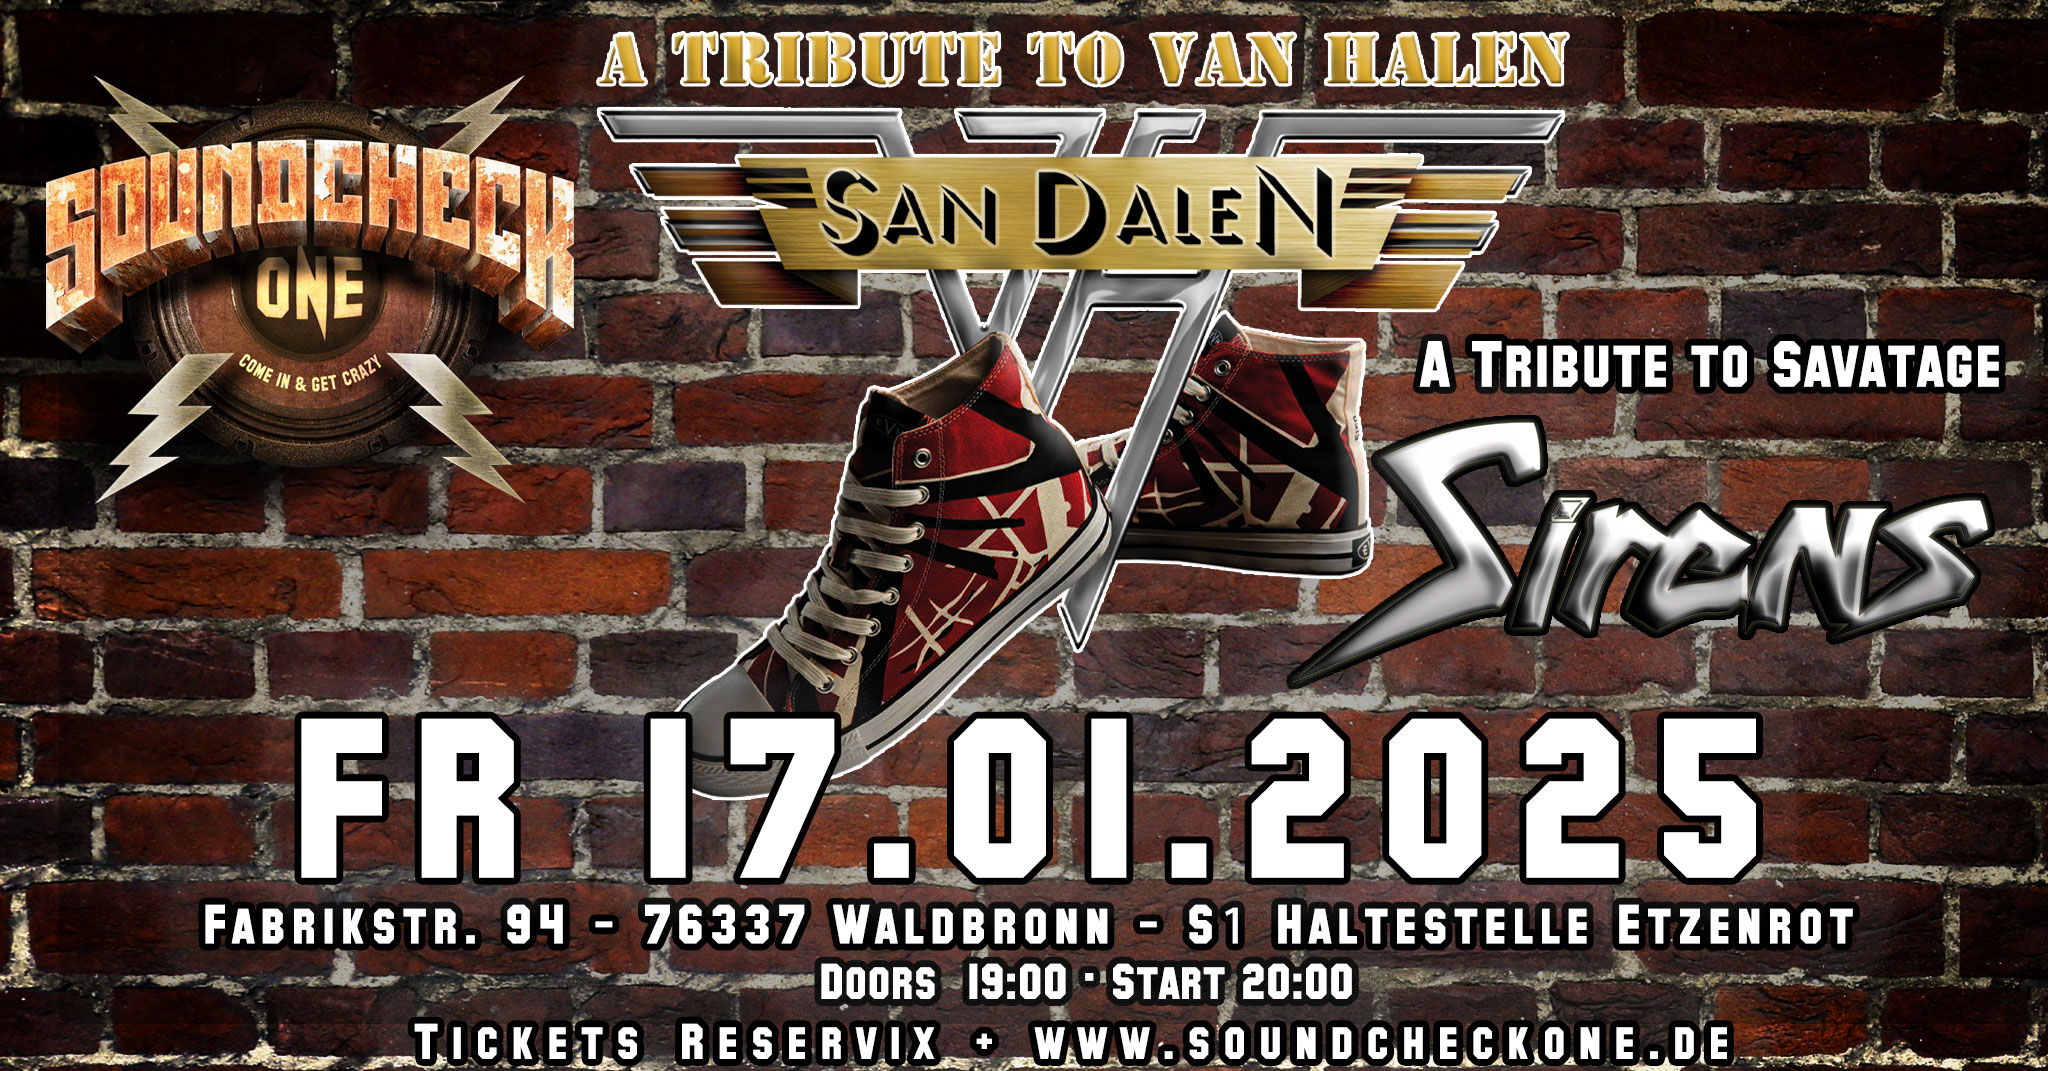 San Dalen + Sirens - A Tribute To Van Halen & Savatage